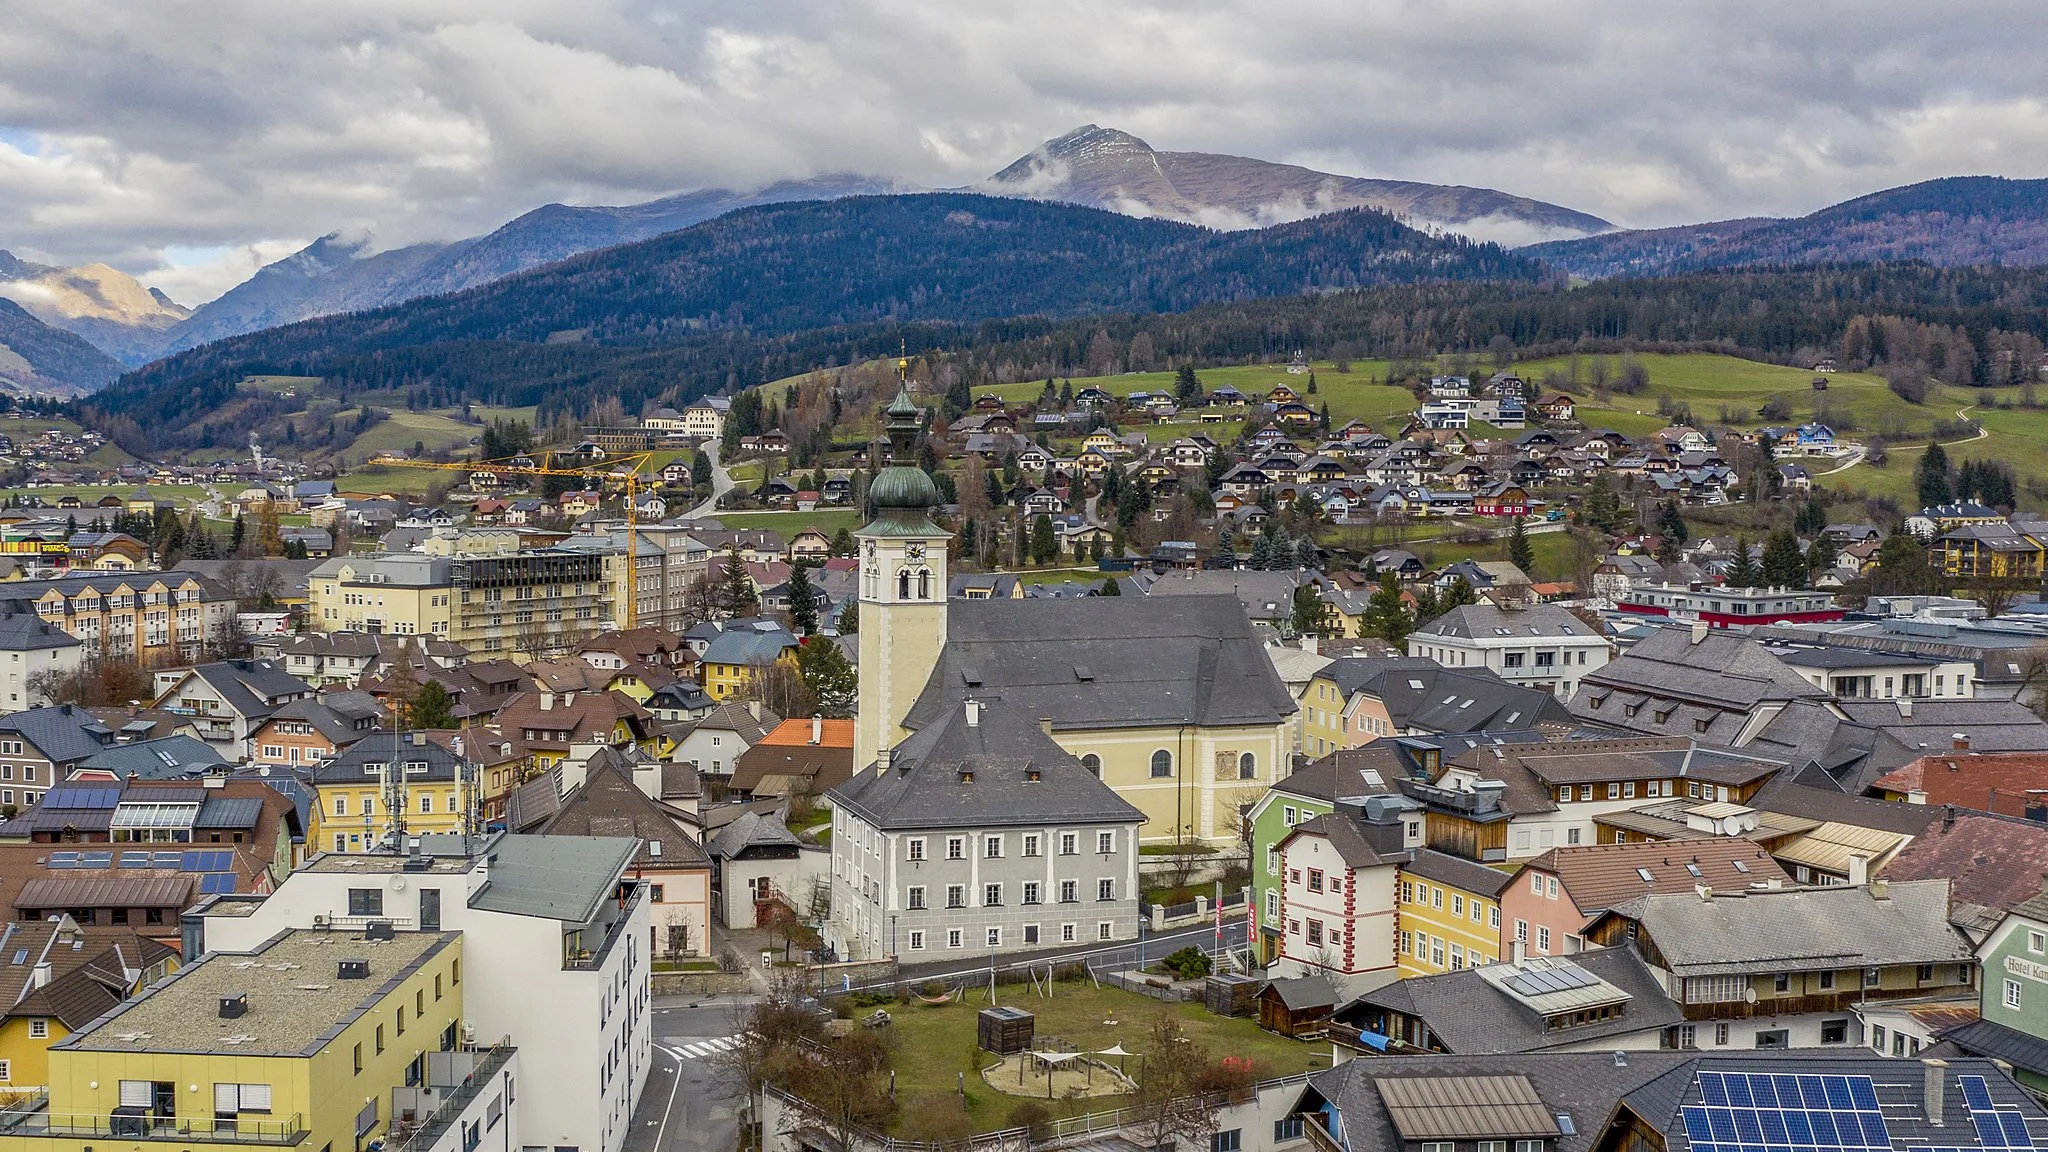 Image de Salzburg